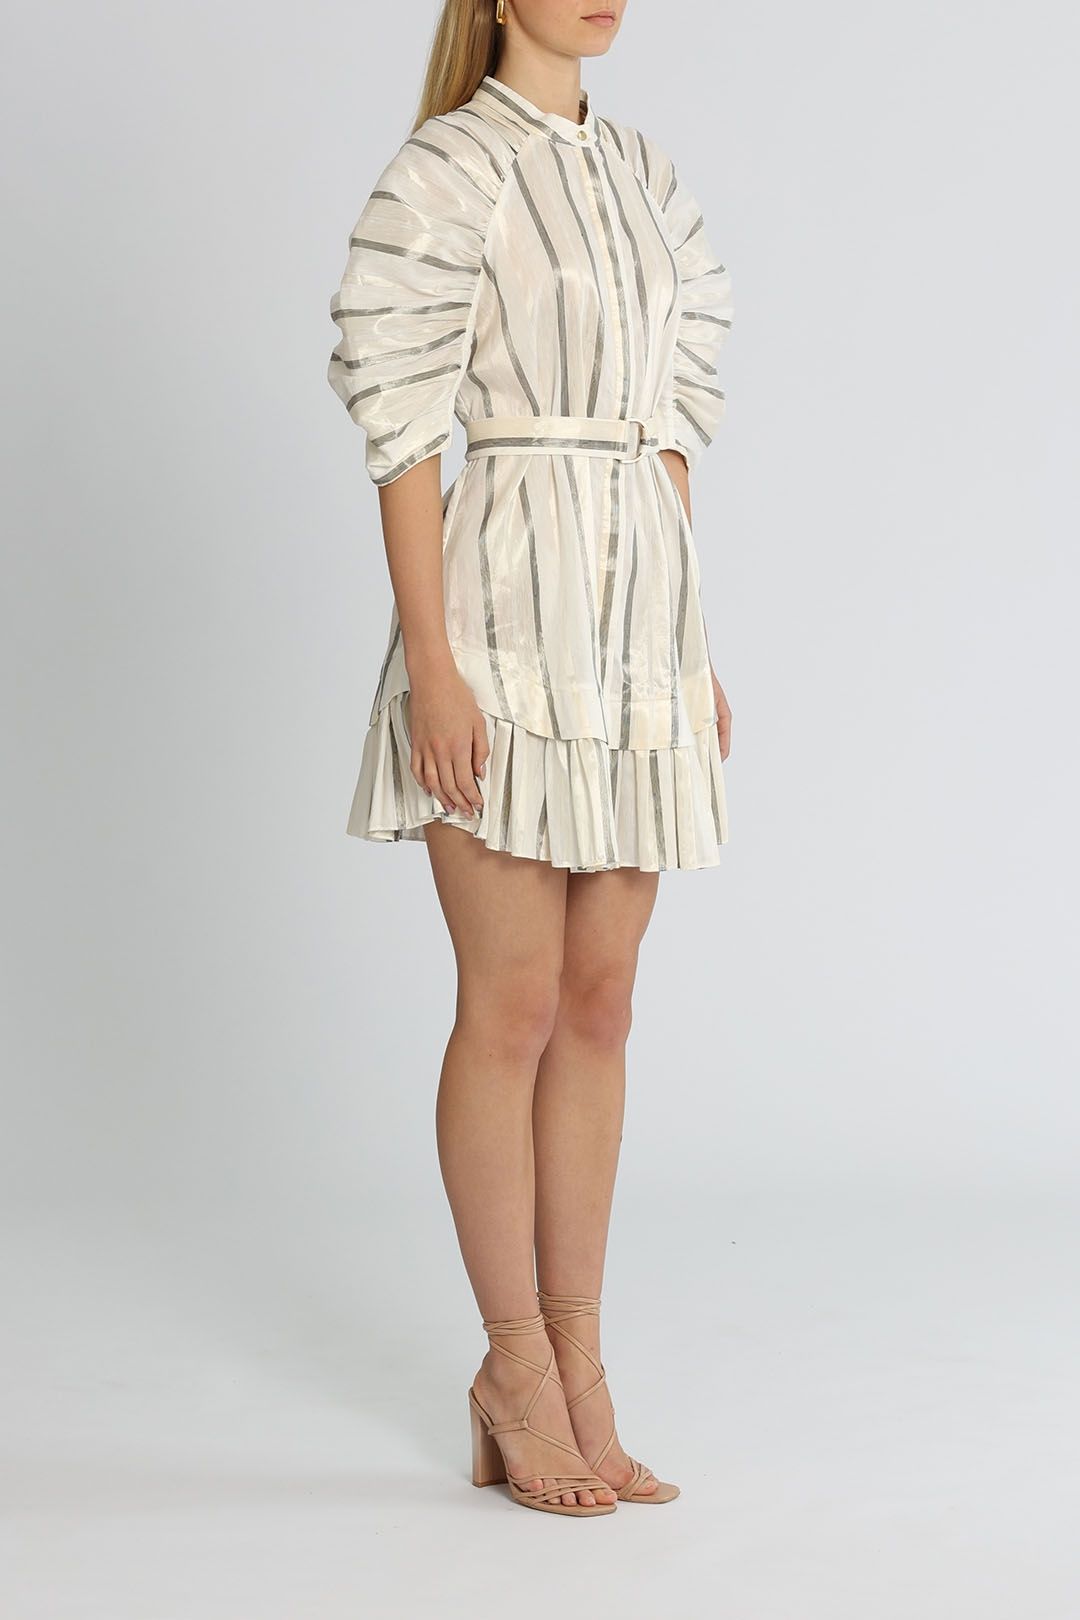 Acler Leighton Dress Stripe